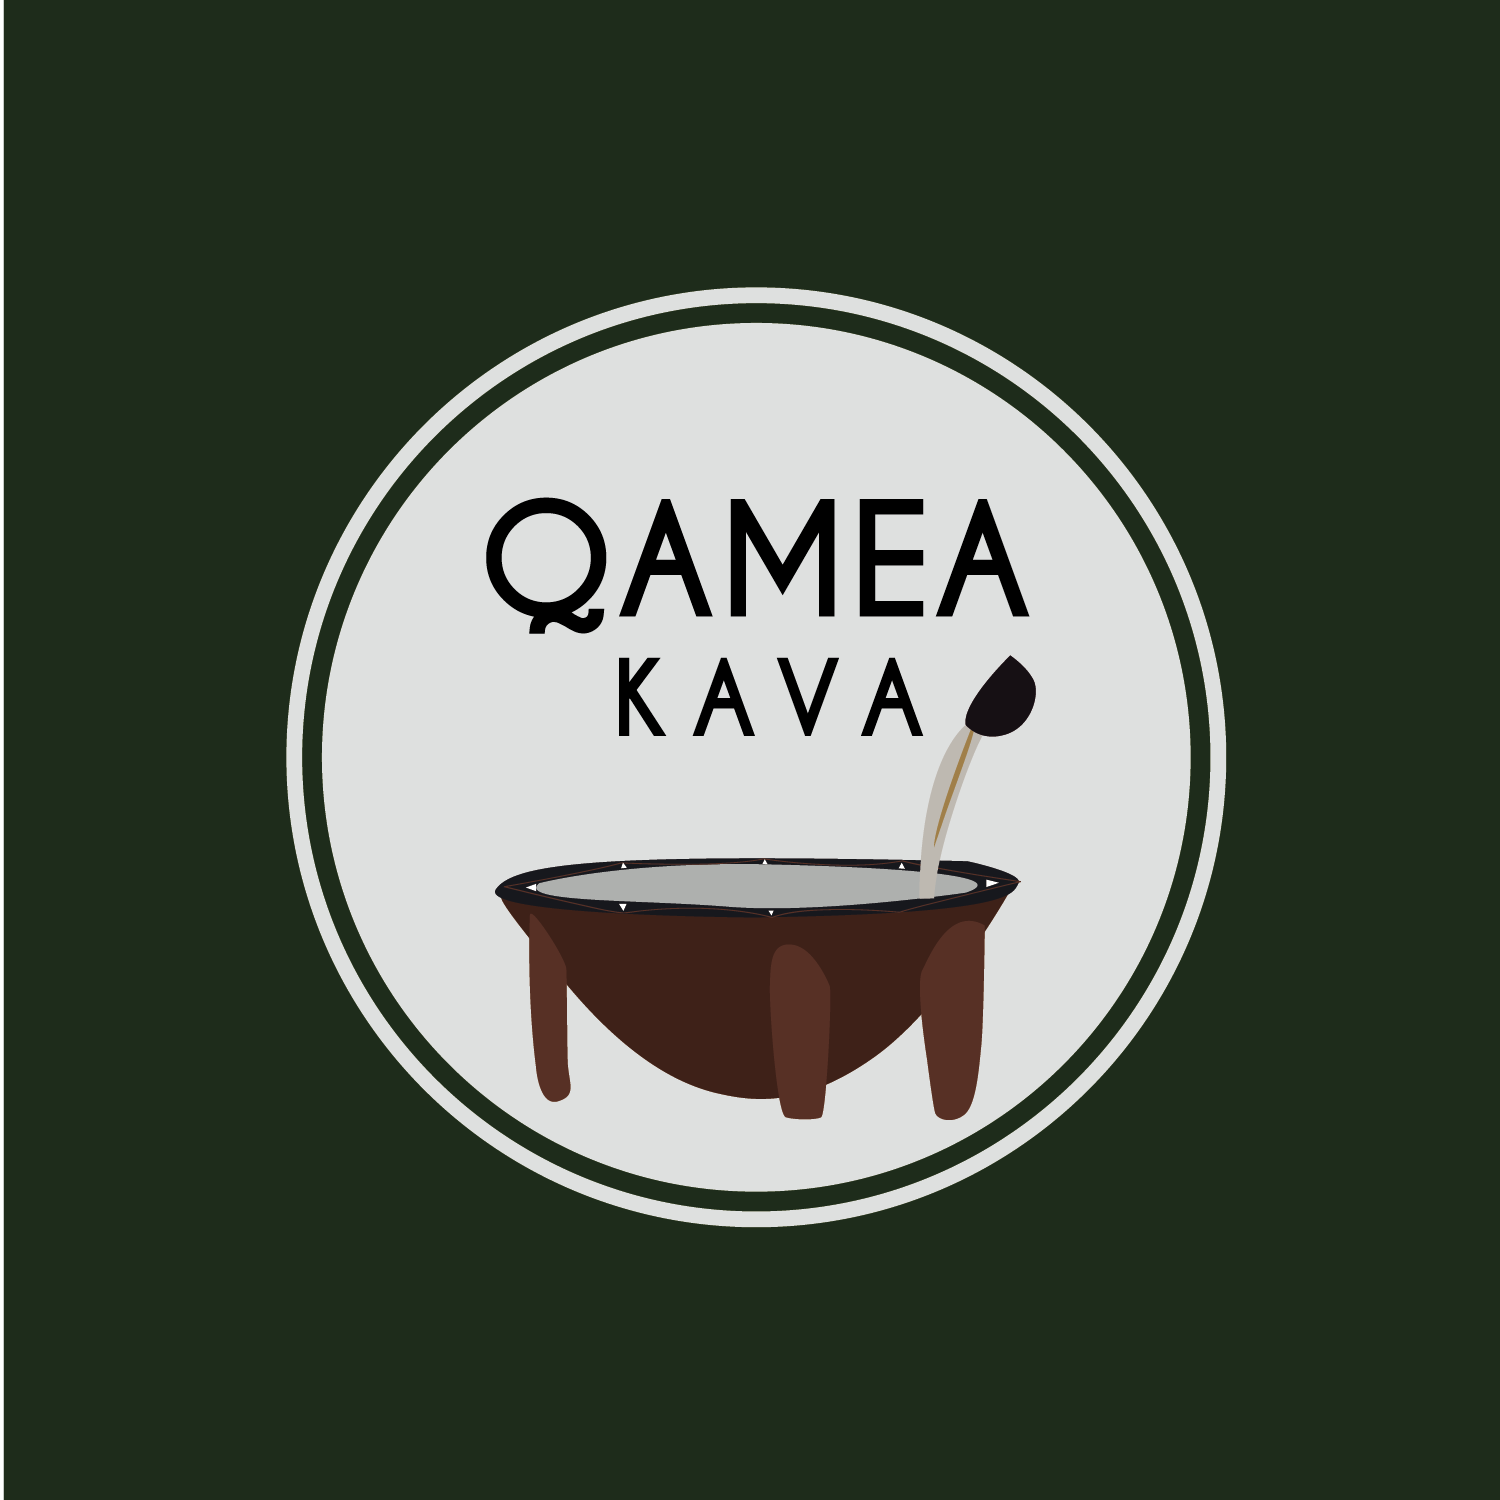 QAMEA_KAVA_LOGO_DESIGN_#3-01.png